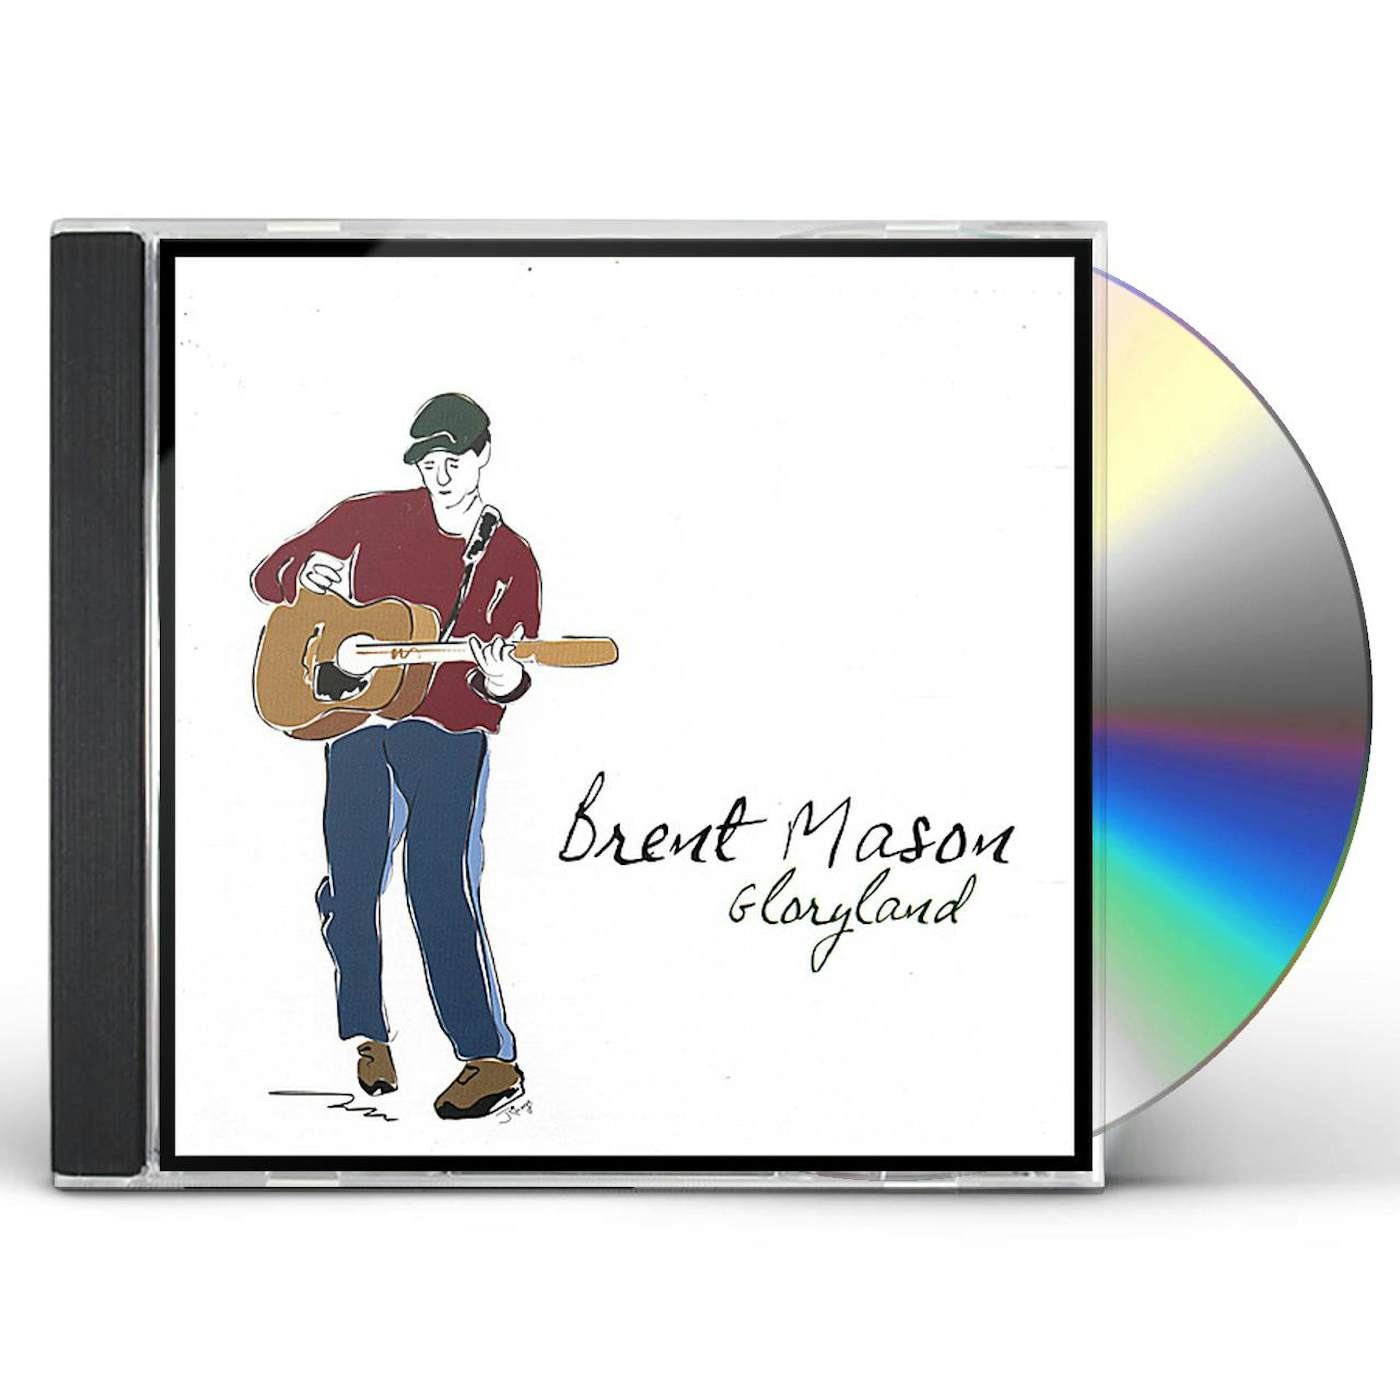 Brent Mason GLORYLAND CD